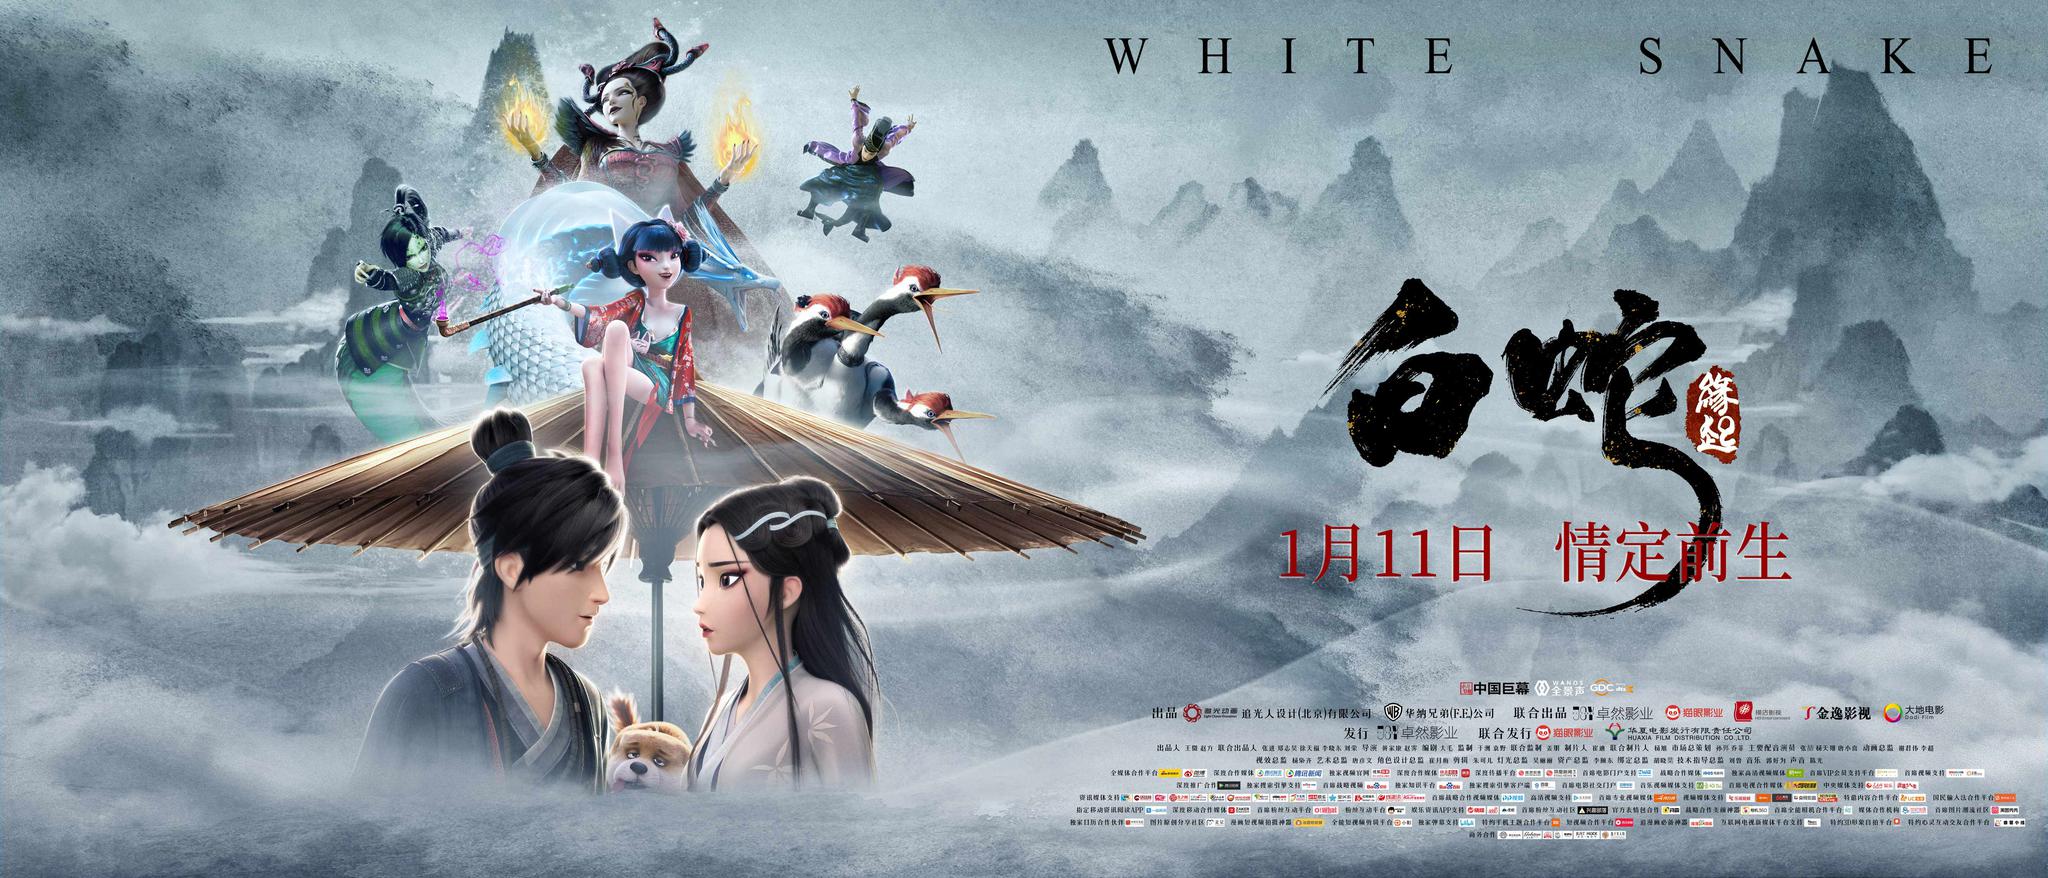 Stiahni si Filmy Kreslené White Snake / Bai she: Yuan qi (2019)[720p] = CSFD 71%